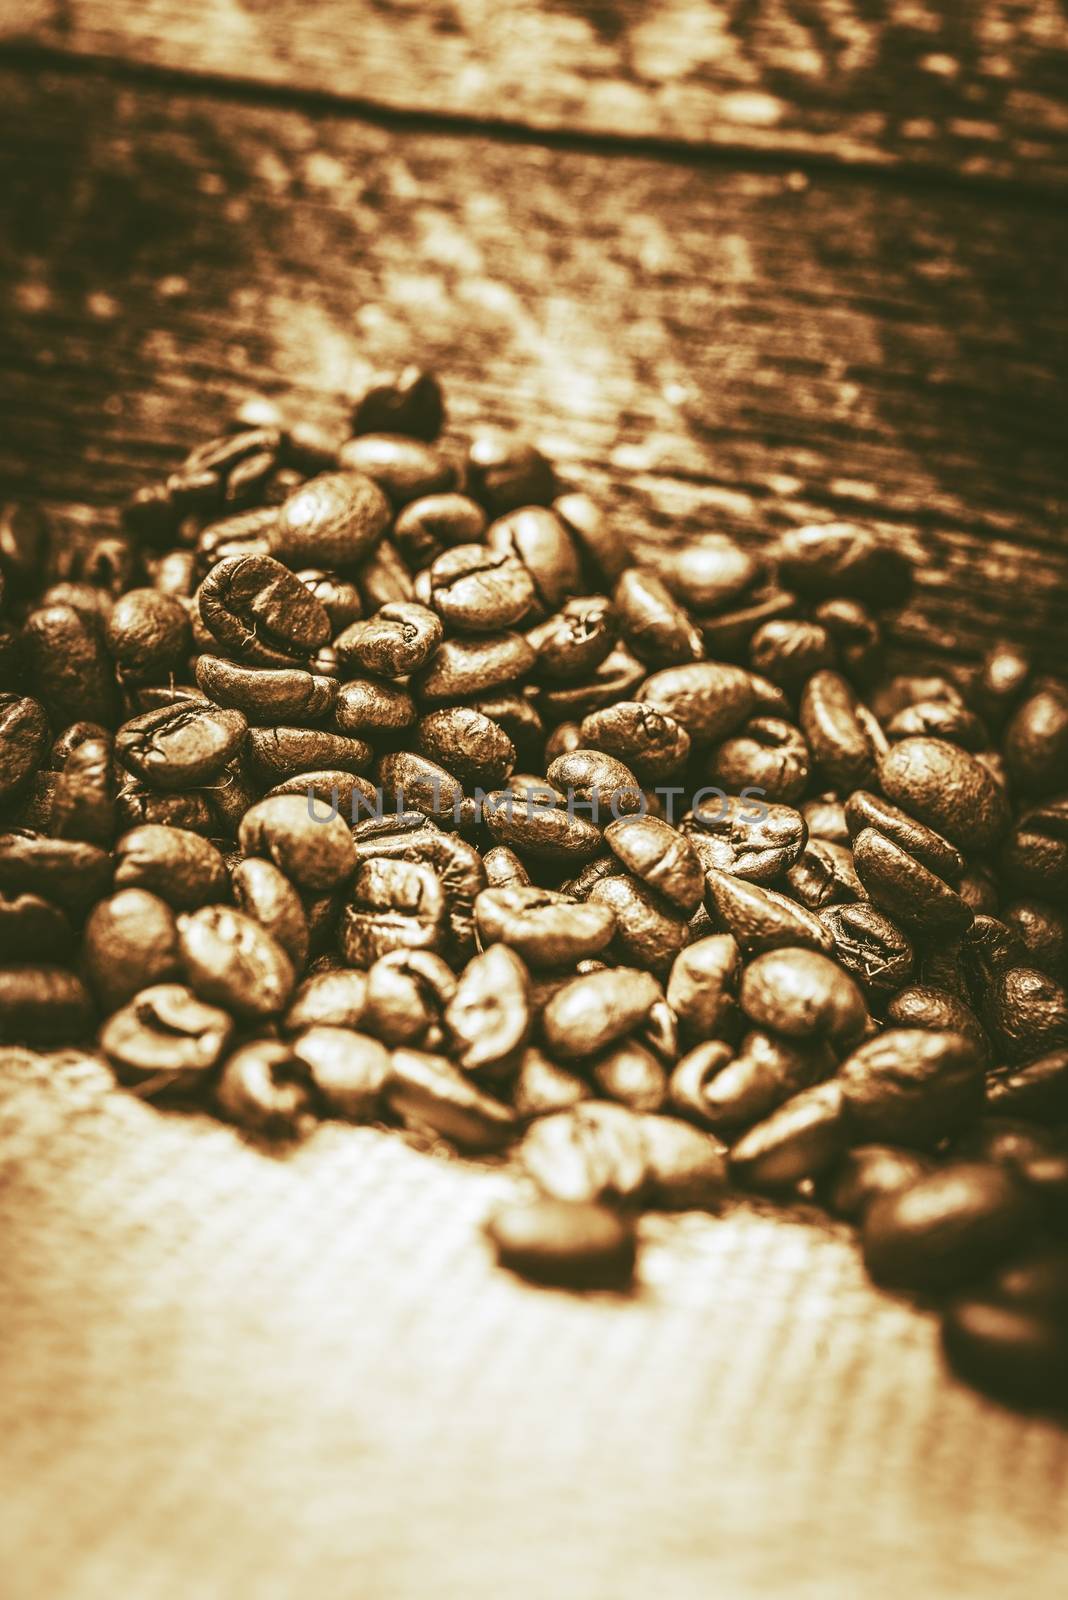 Freshly Roasted Coffee by welcomia